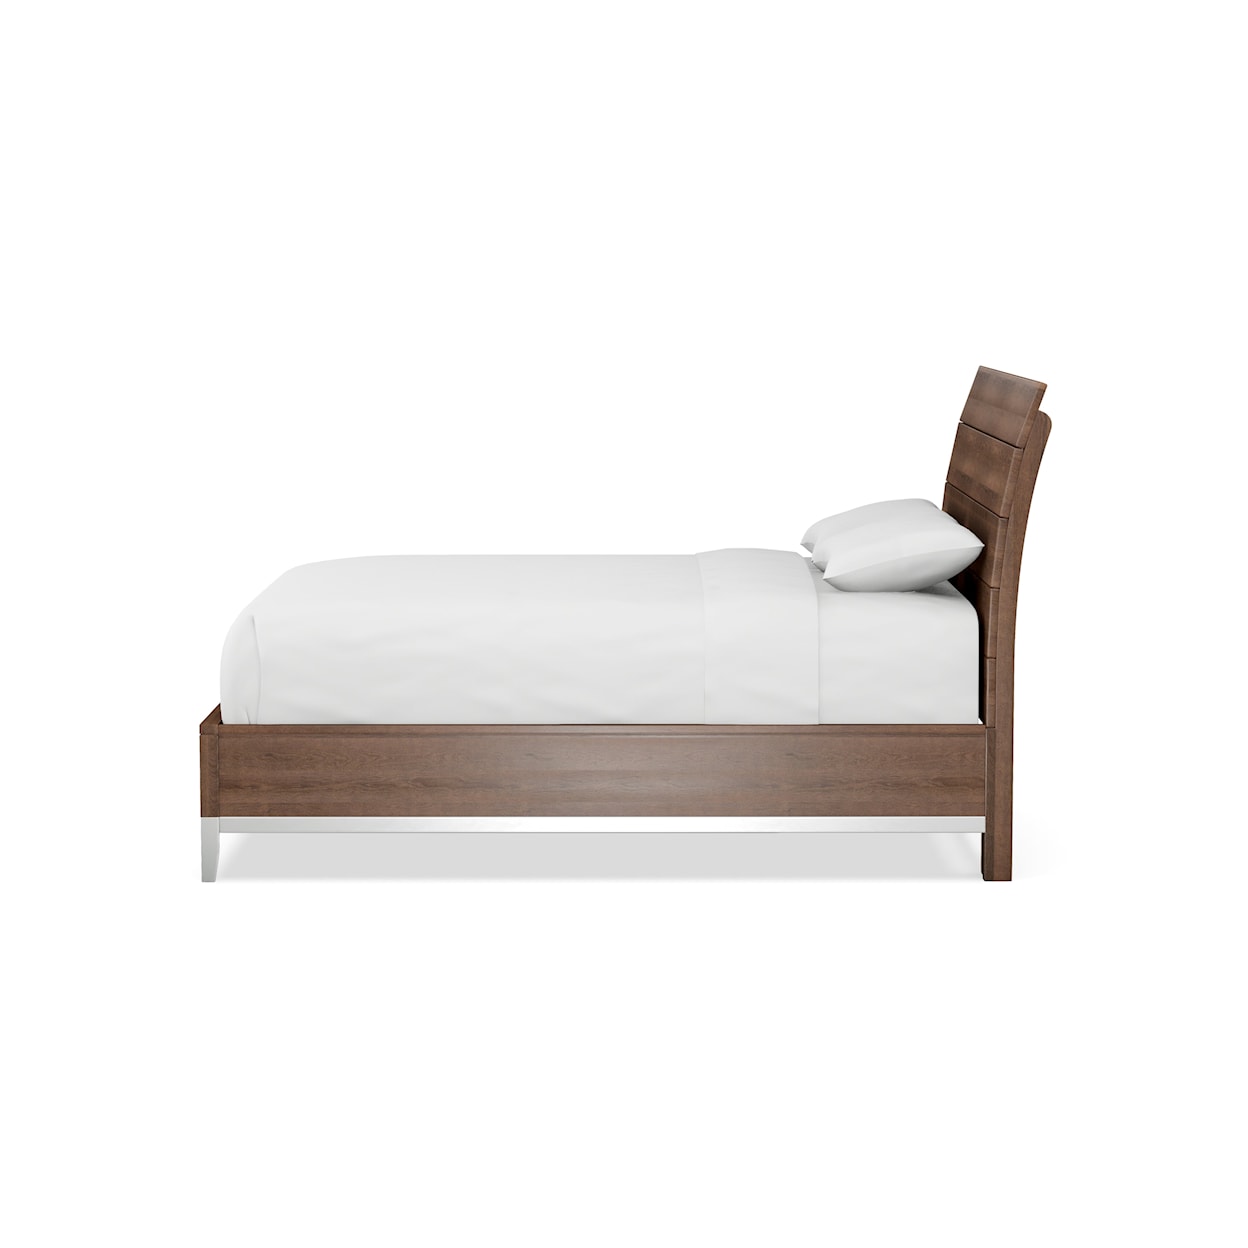 Durham Defined Distinction Queen Wood Plank Bed